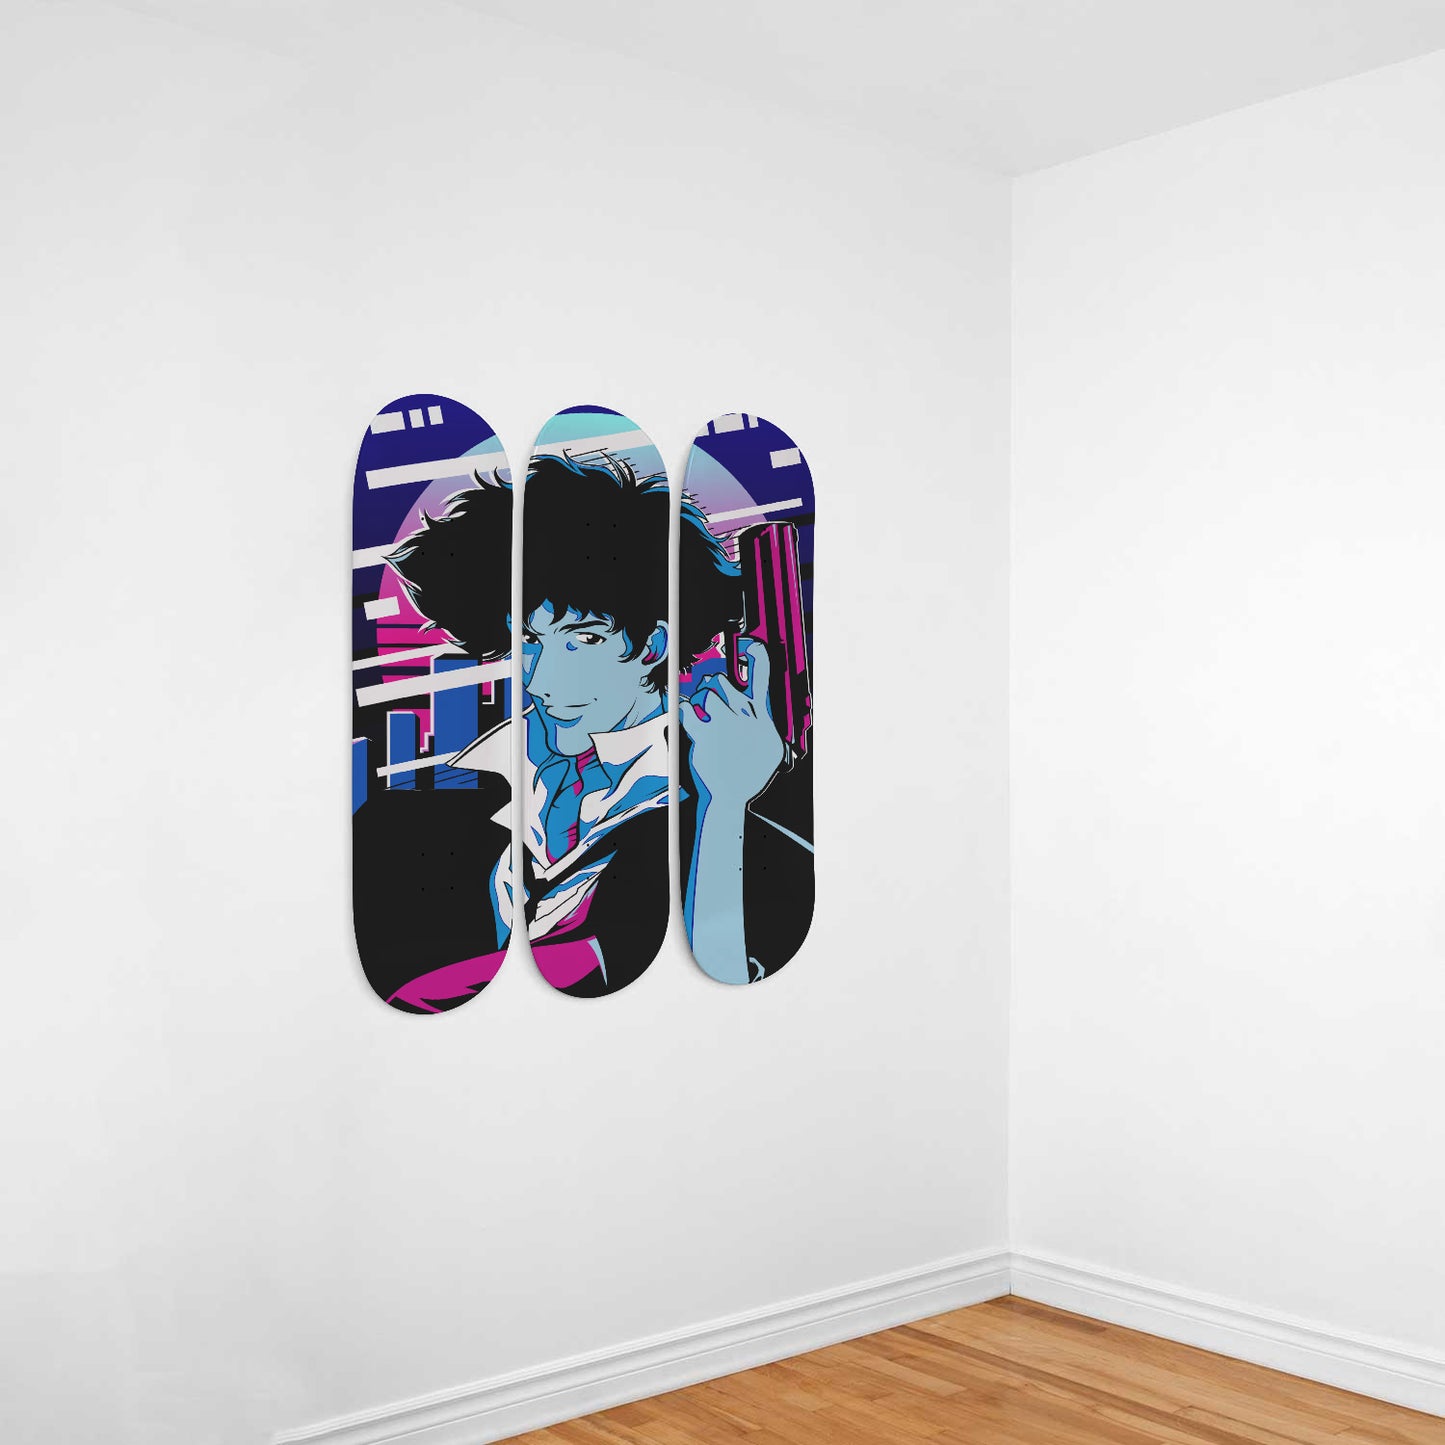 Spike Spiegel With Gun | Wall Art -Cowboy Bebop Inspired | Japanese Neo Noir Science Fiction Anime Inspired | 3 Piece Skateboard Wall Art, Deck Art | Wall Hanging Decor | Custom Painted Wall Art